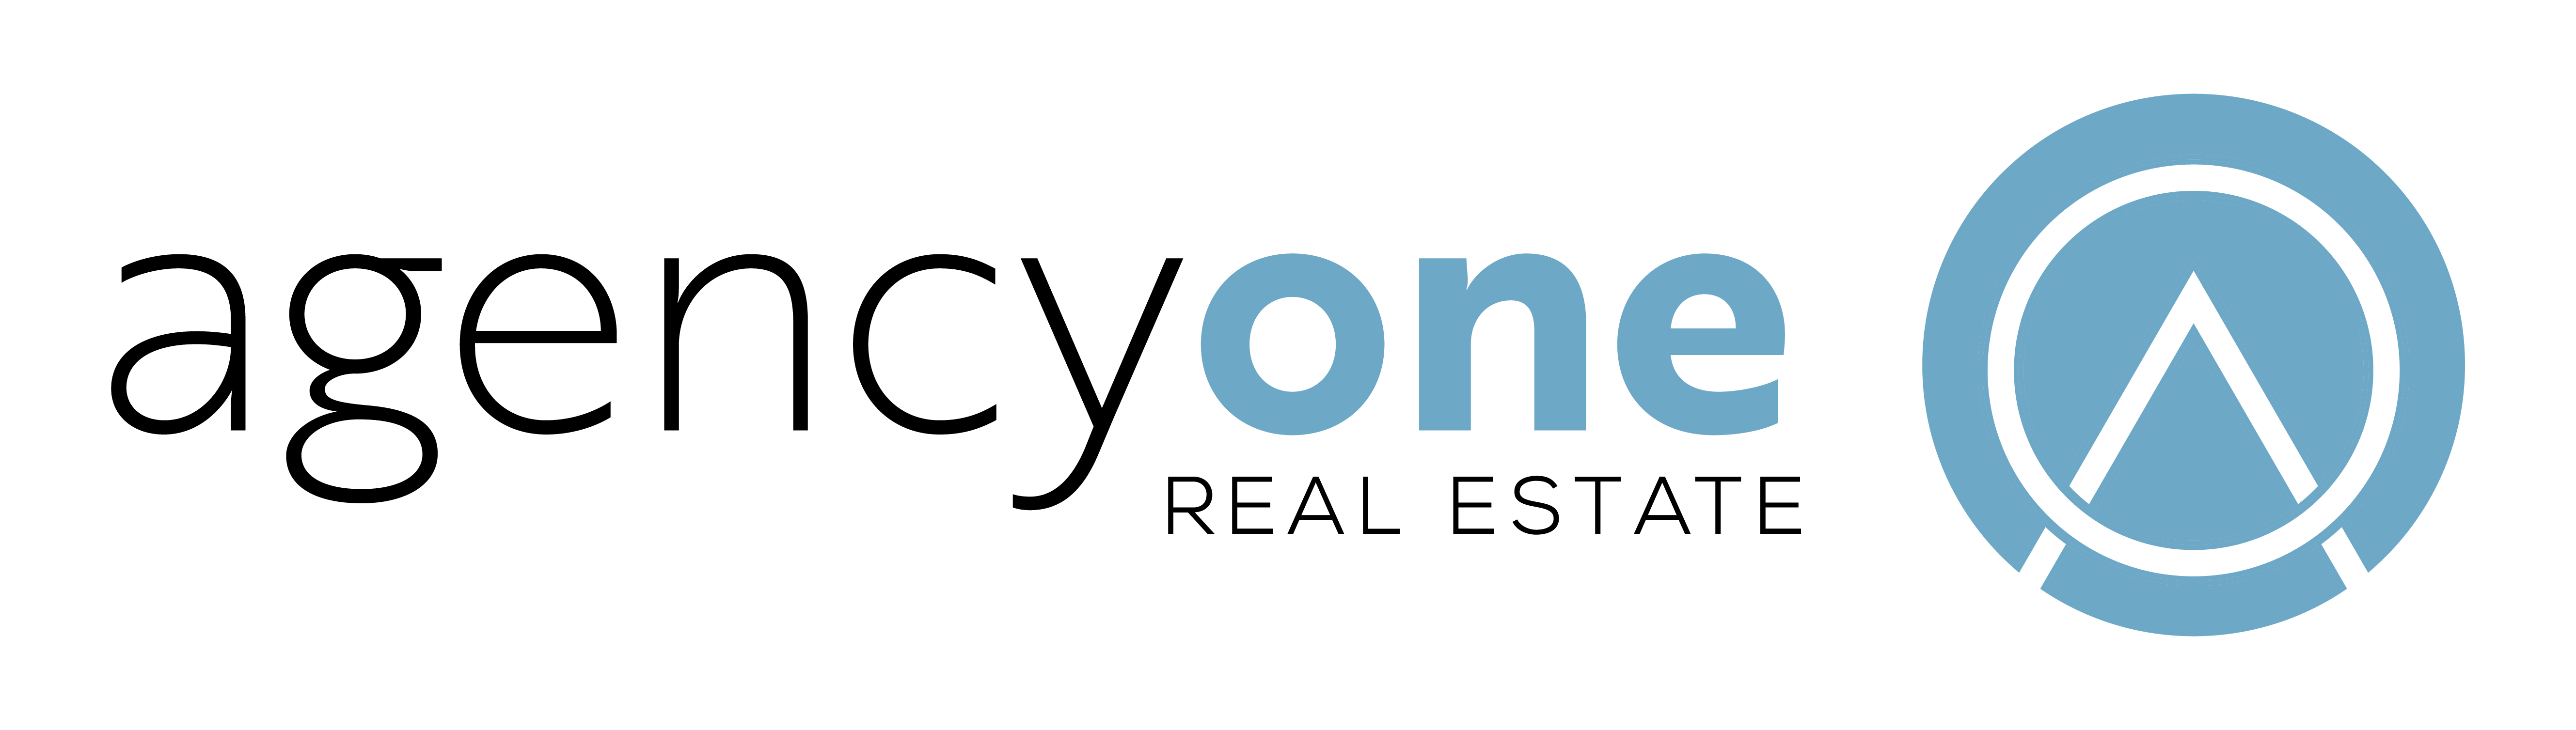 Agency One logo